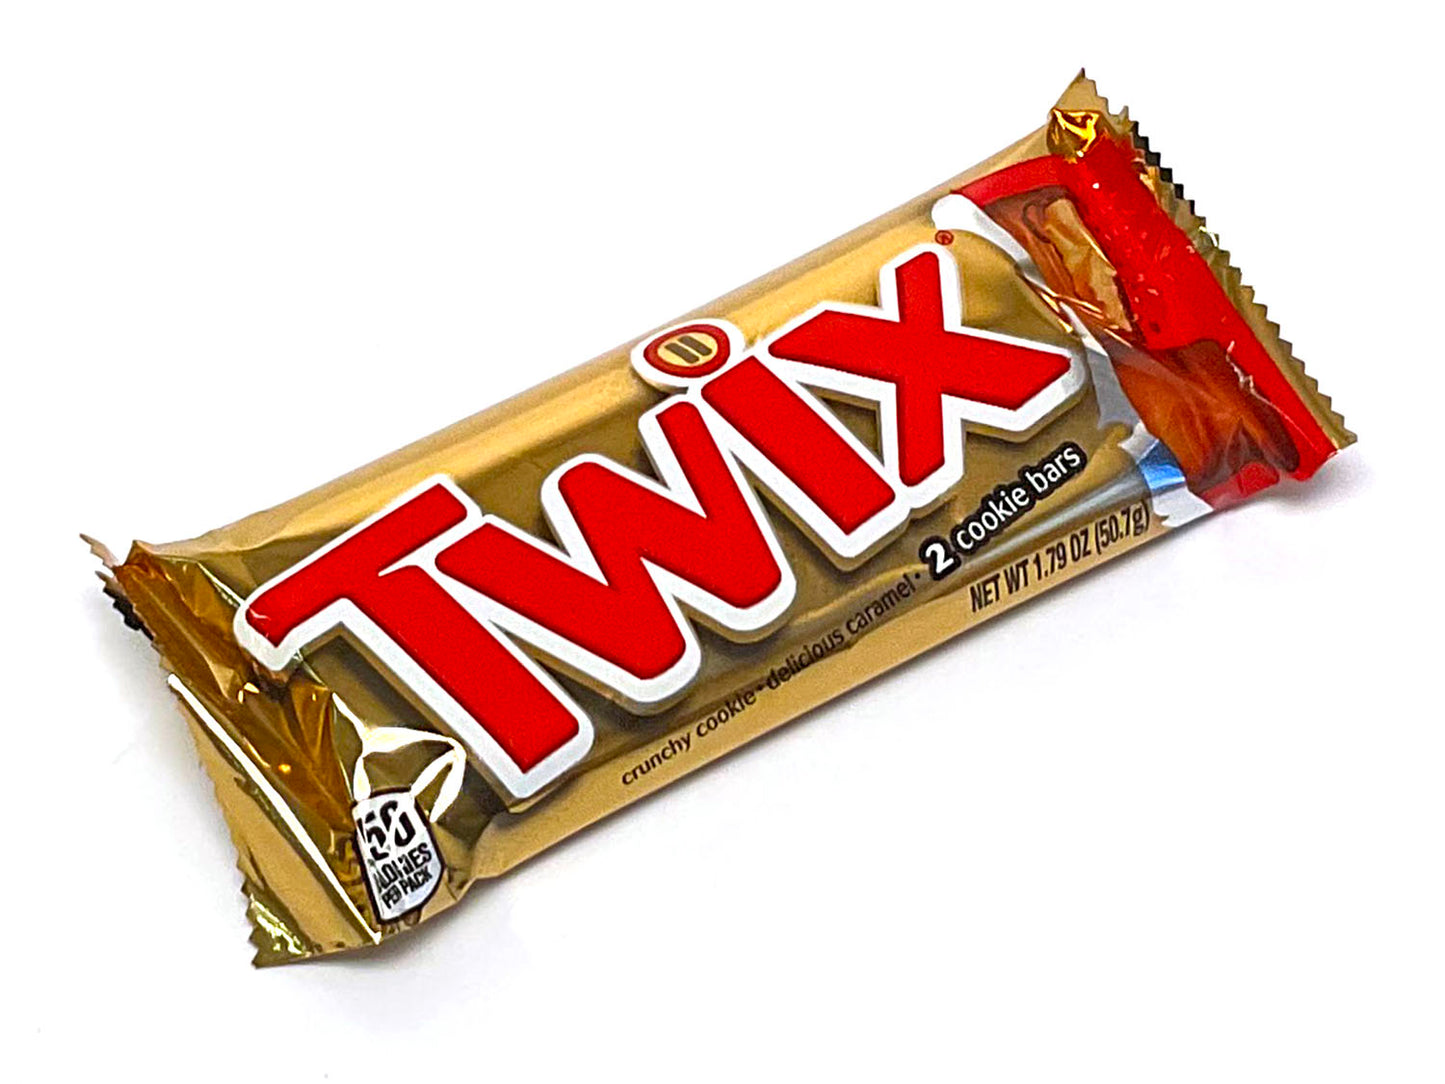 Twix - 1.79 oz bar